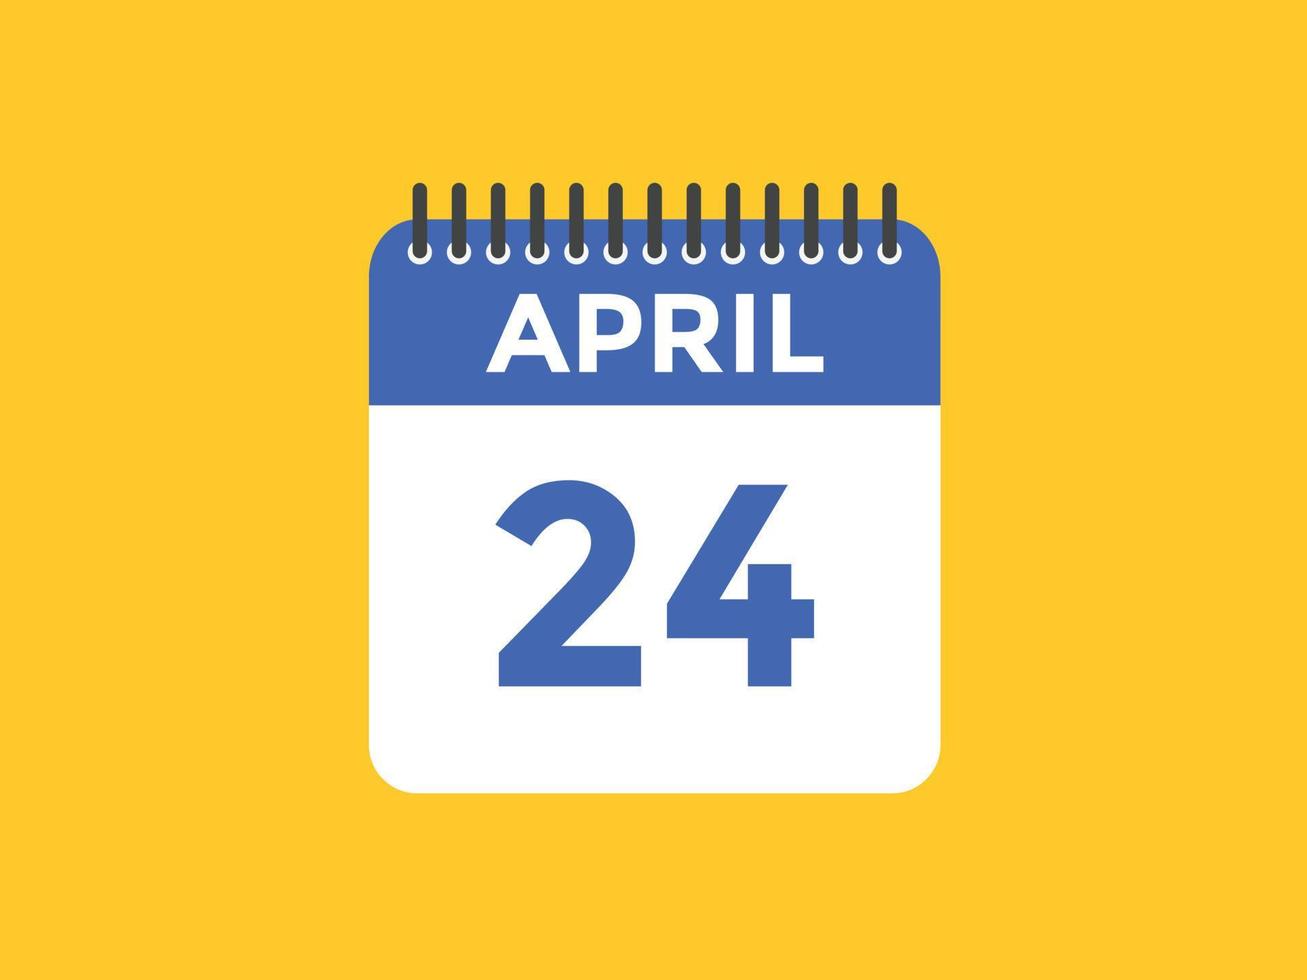 april 24 calendar reminder. 24th april daily calendar icon template. Calendar 24th april icon Design template. Vector illustration